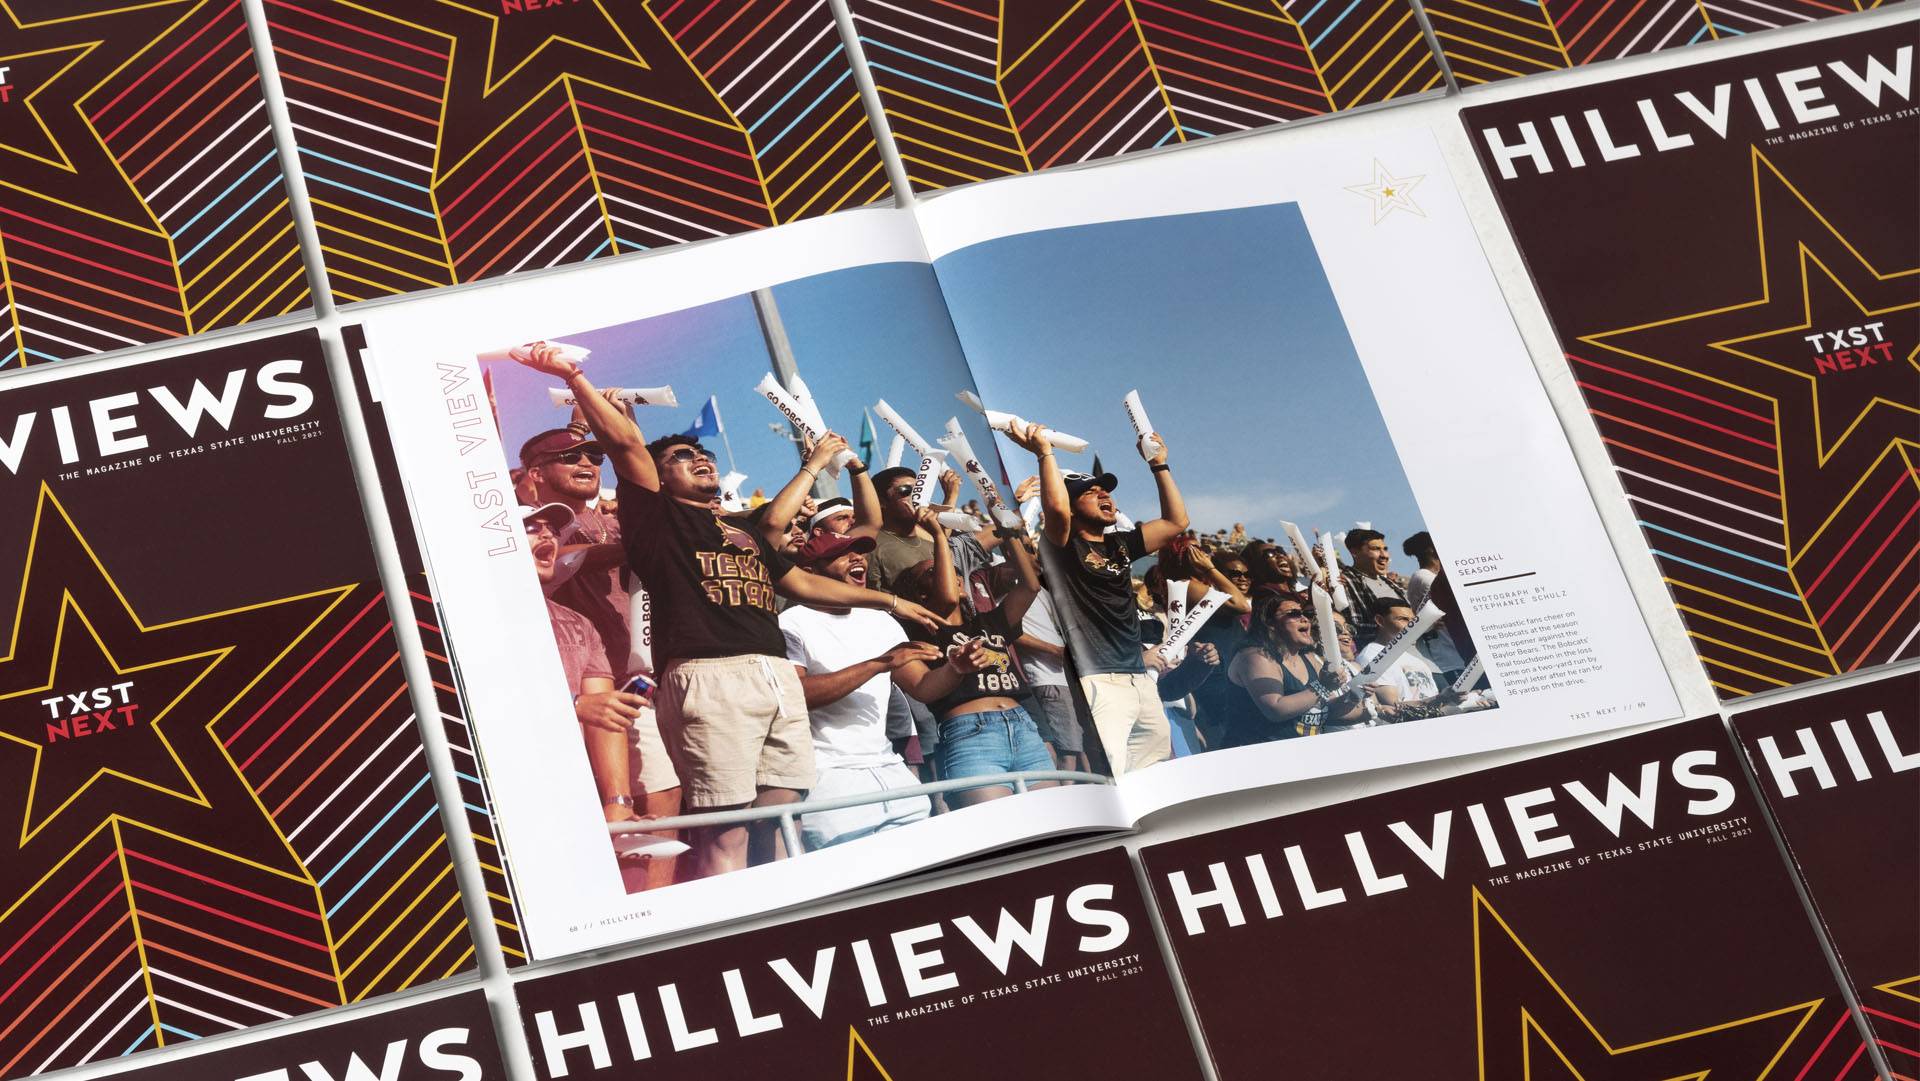 Photo of hillviews magazine spread that reads "football season"